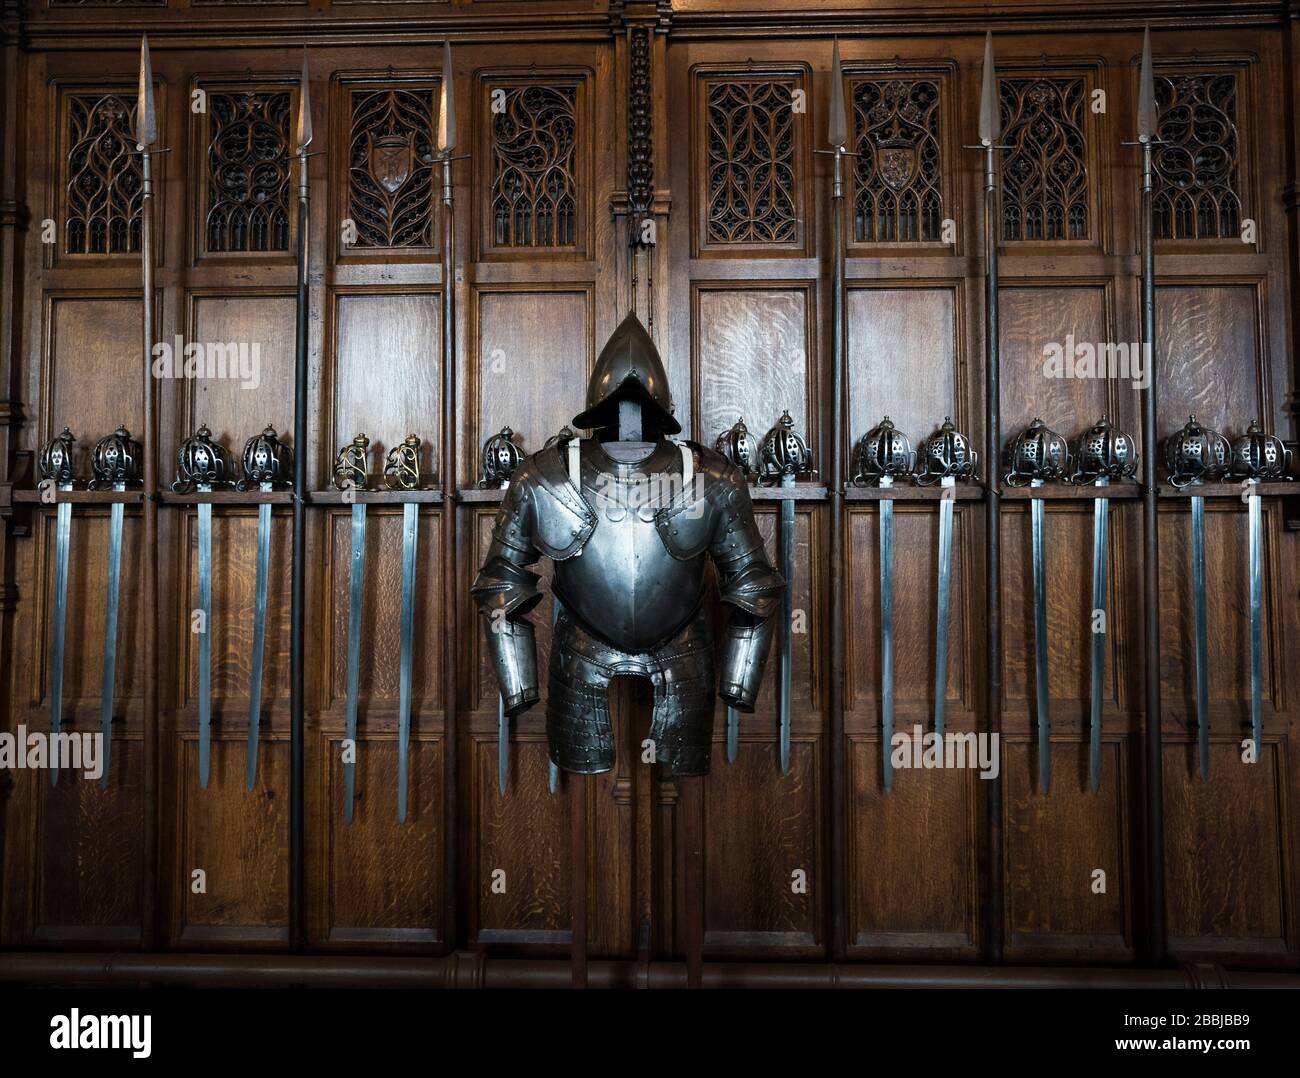 Knight in shining armor Stock Photo